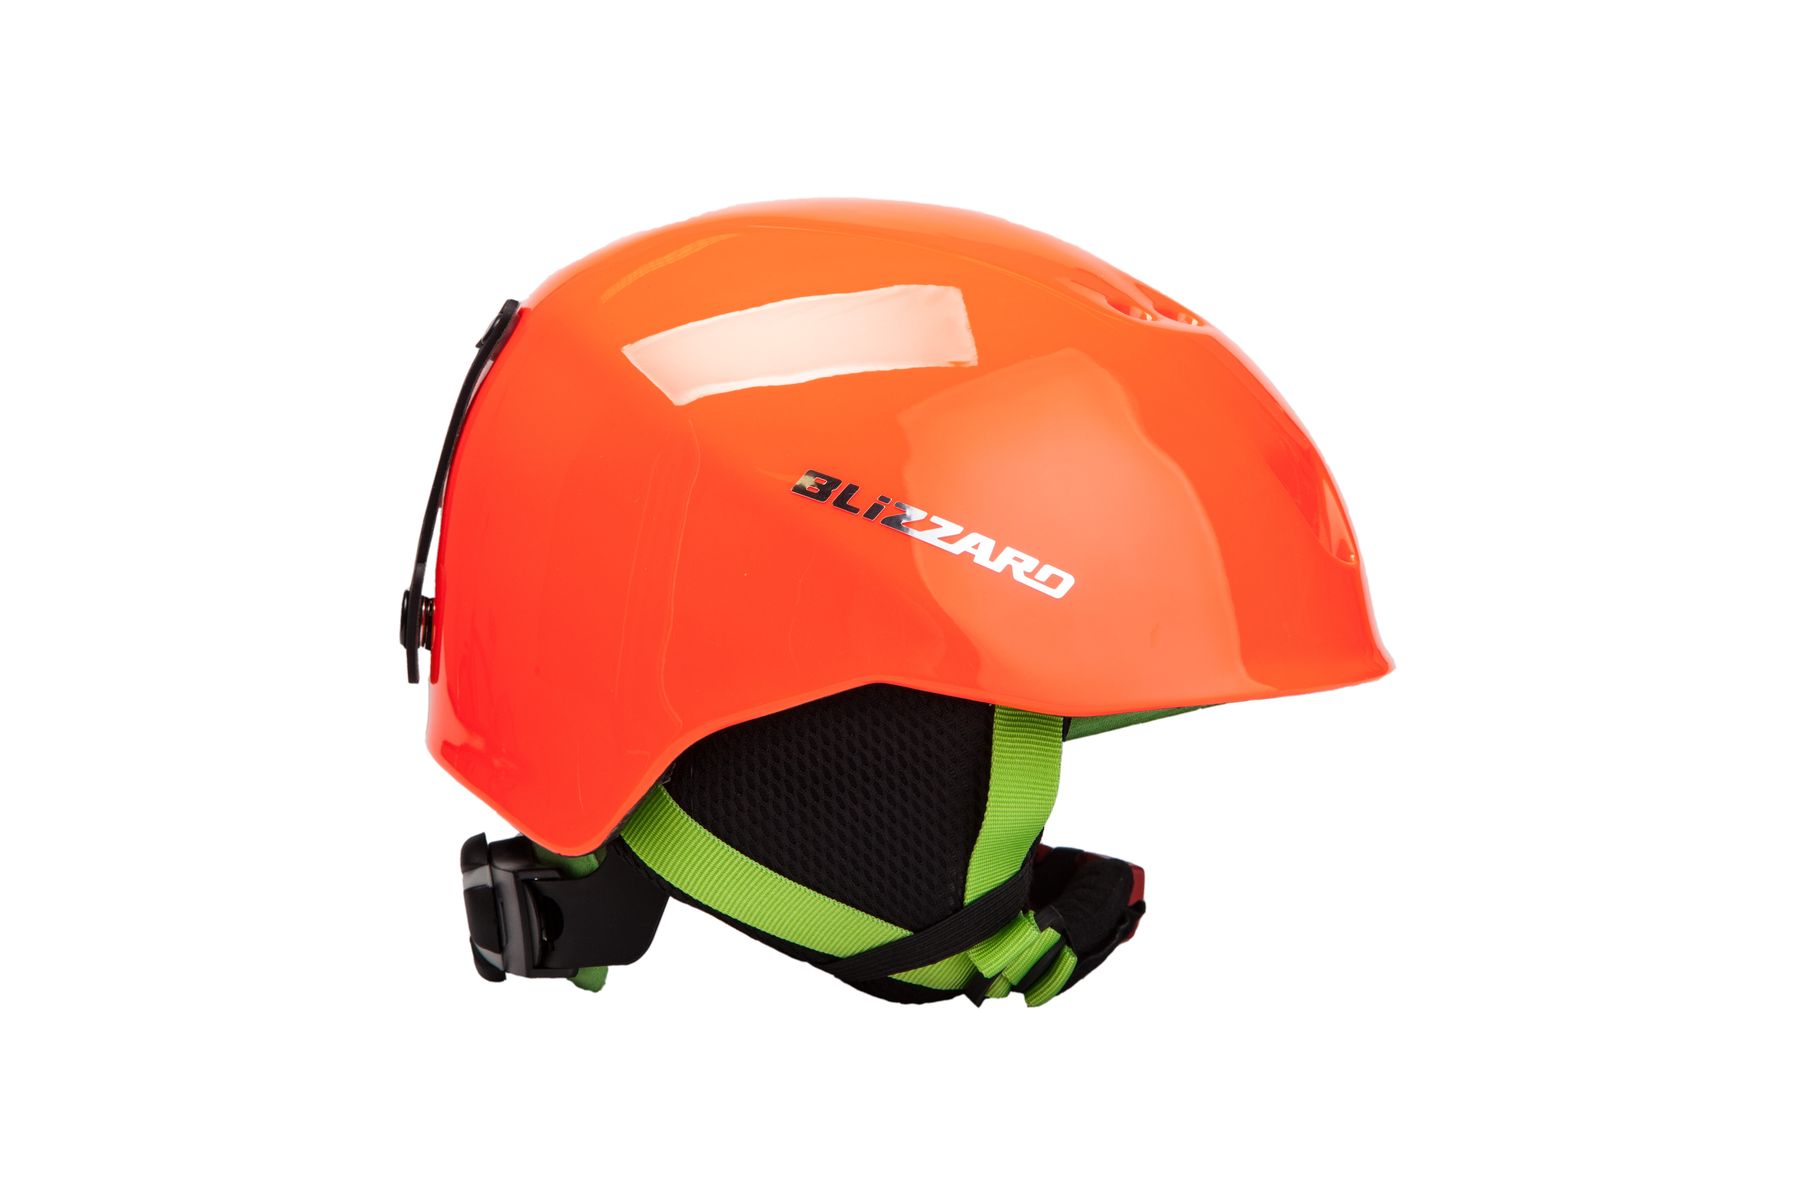 SIGNAL ski helmet, orange